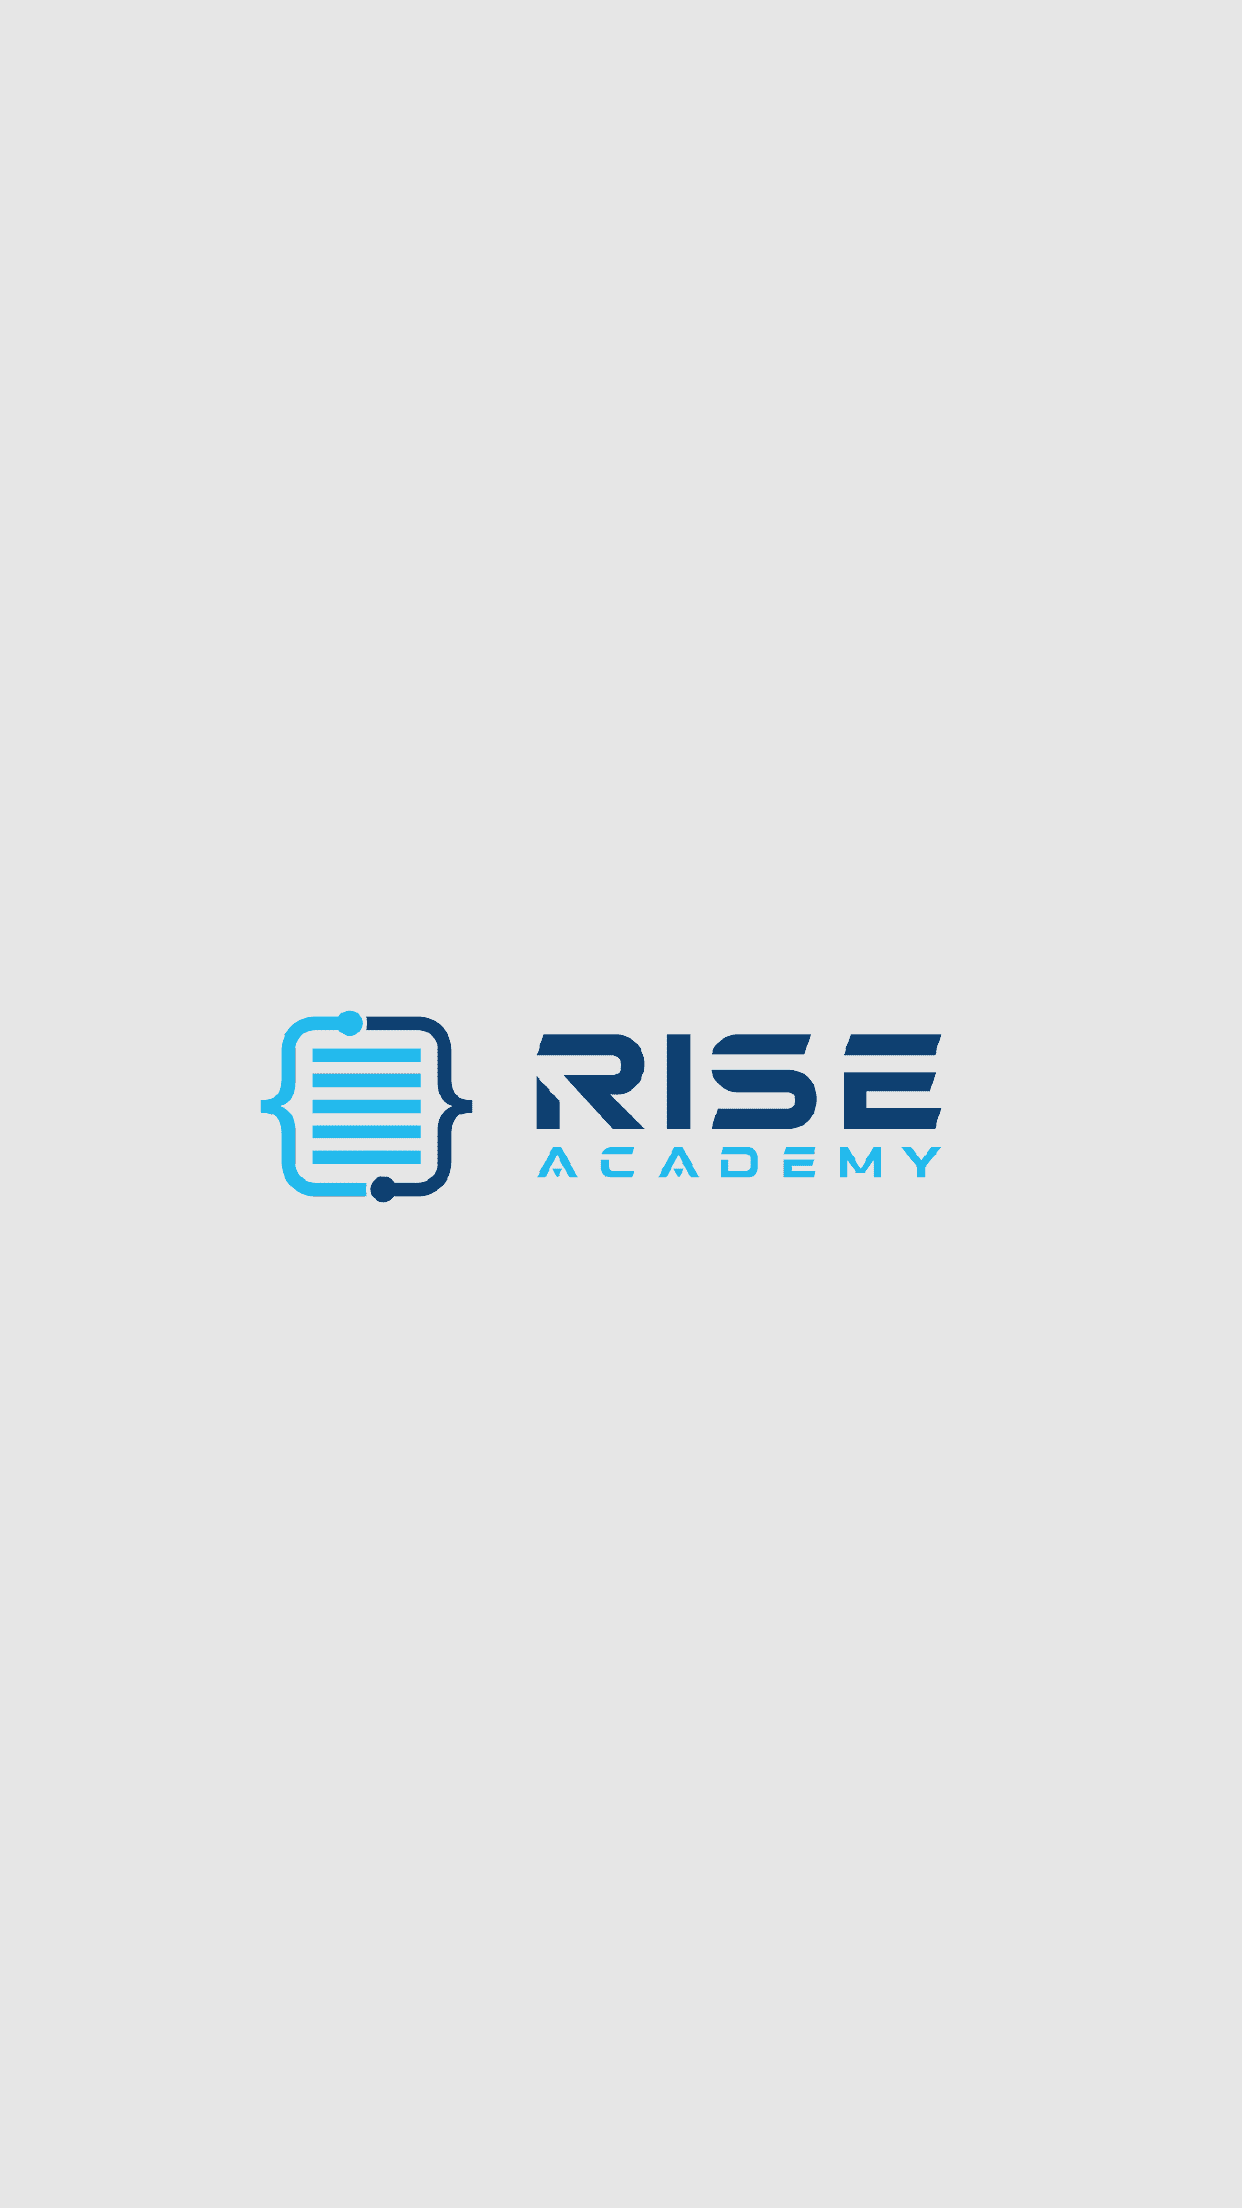 Rise Academy iRise hub